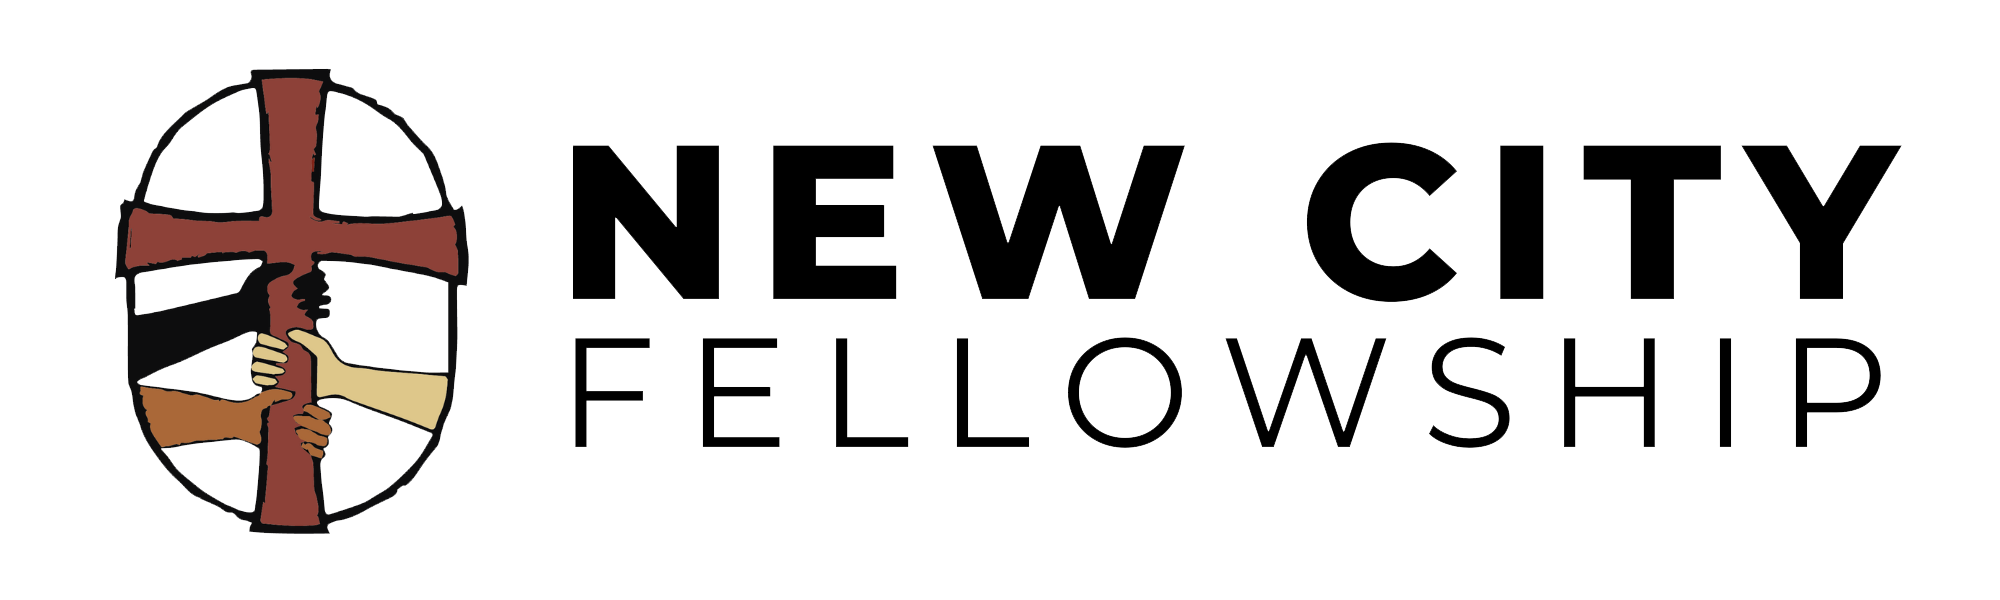 New City Fellowship - Logo